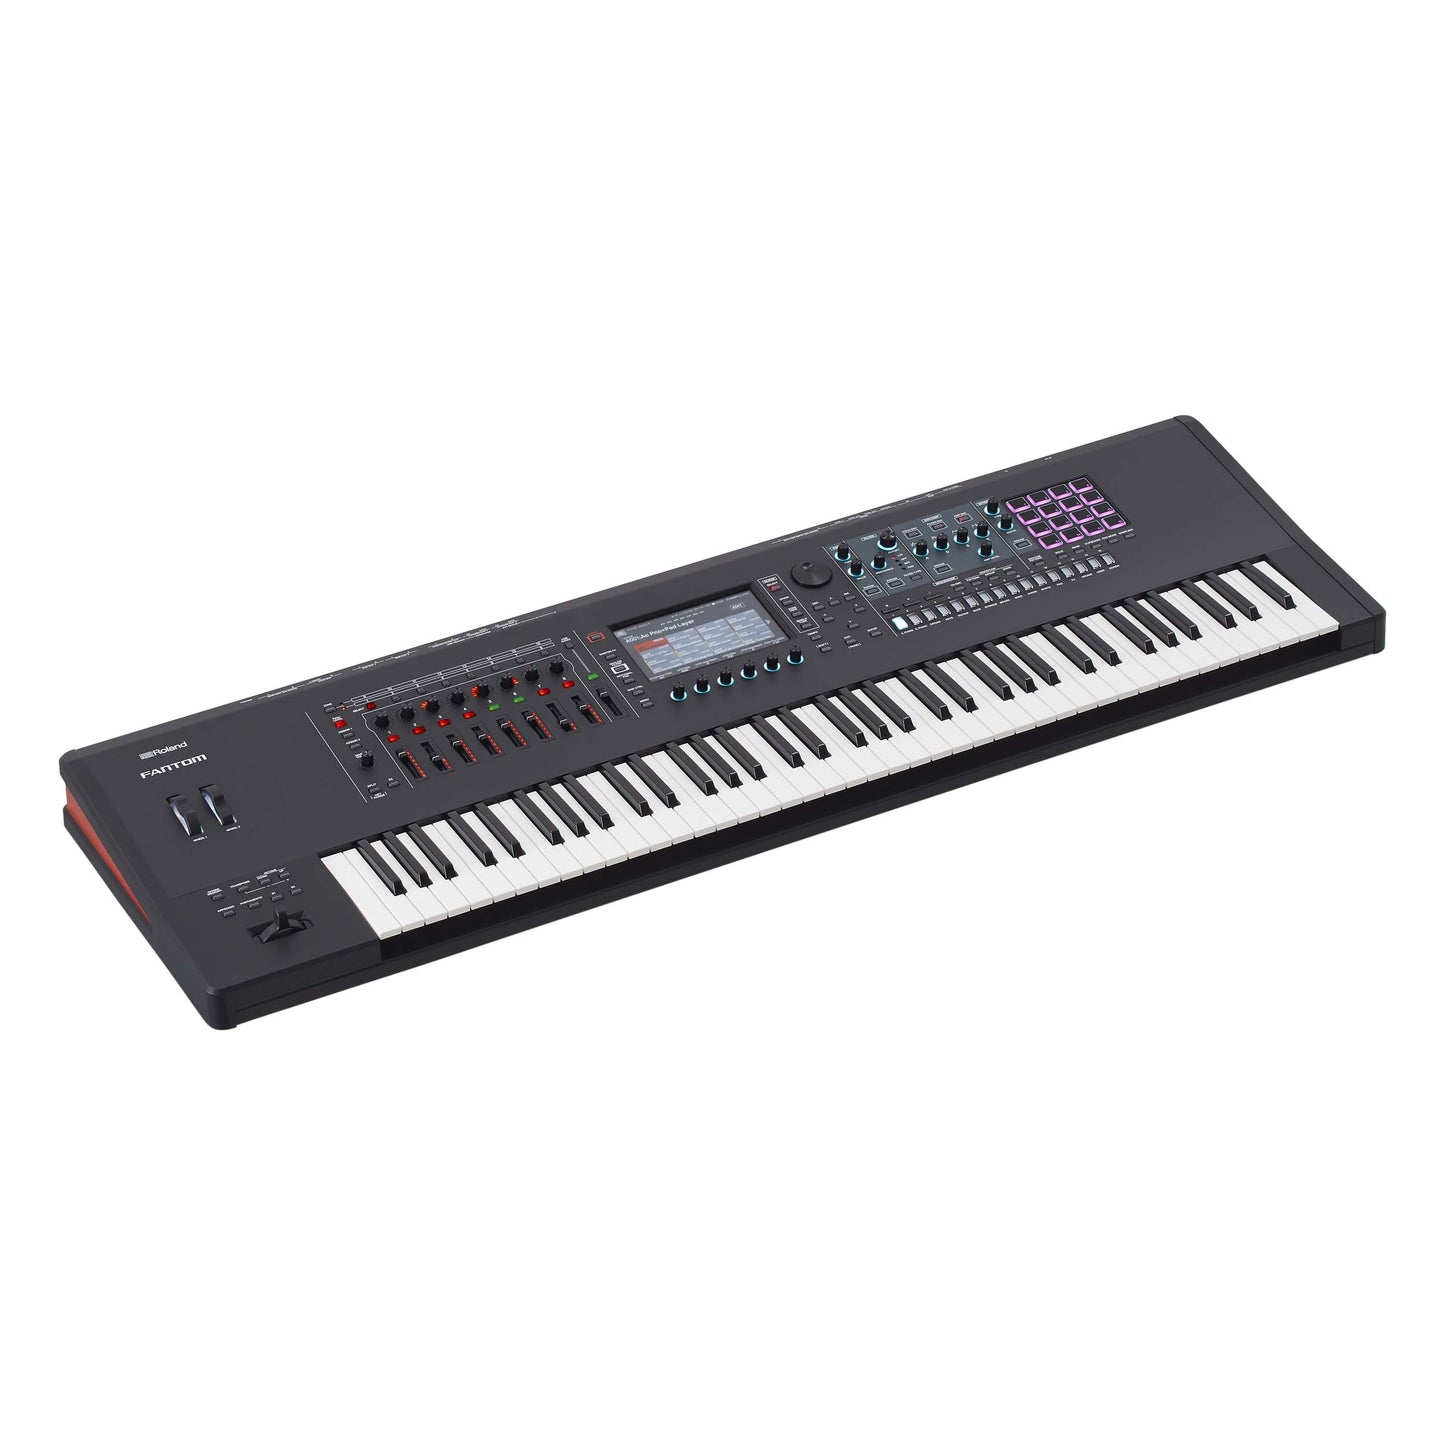 Roland FANTOM-7 76-Key Music Workstation Keyboard